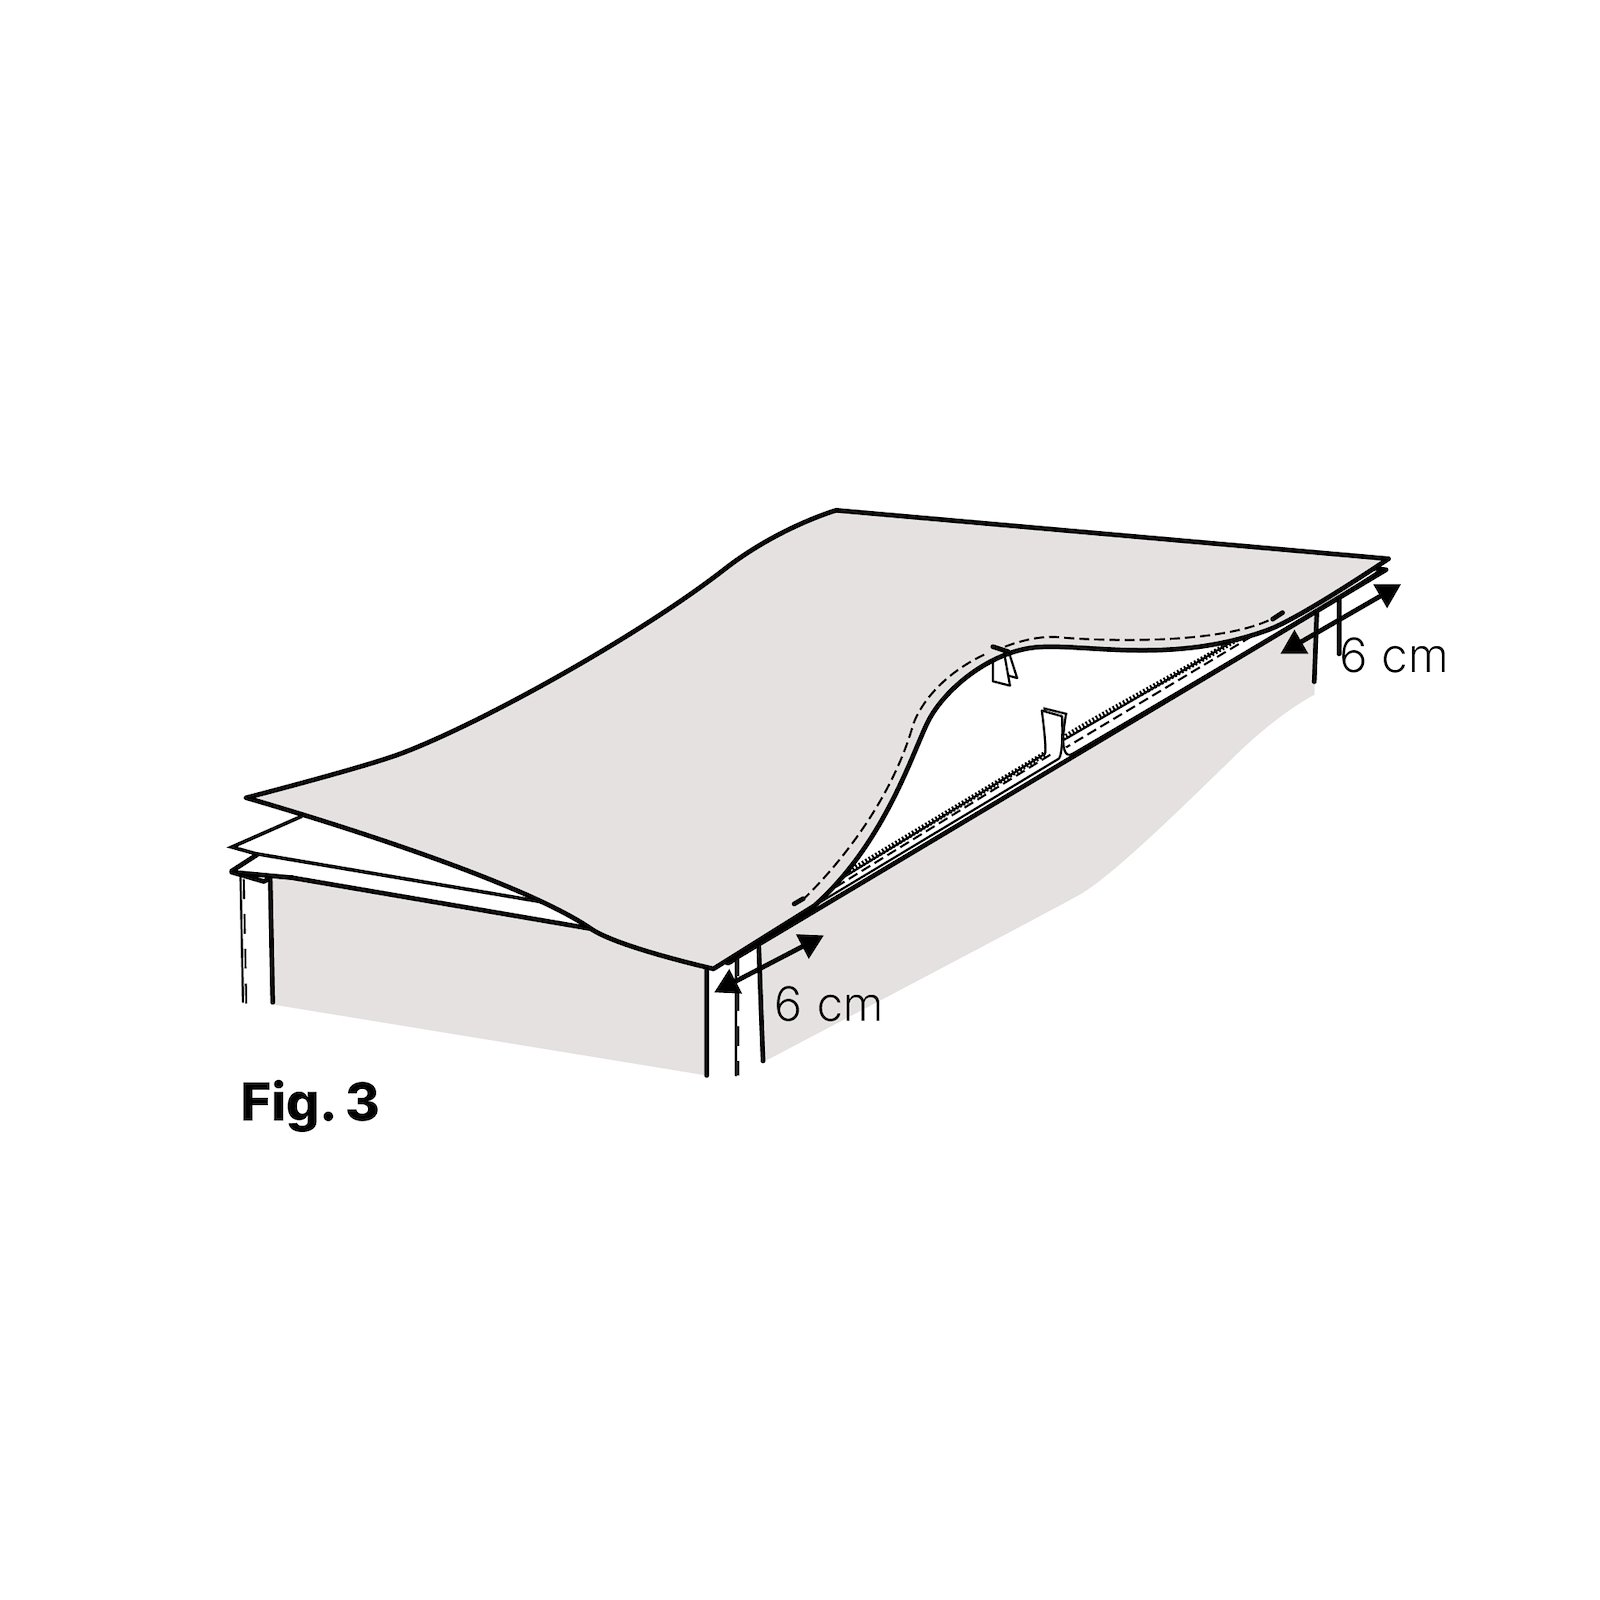 Pallet mattress Diy5015-step3.jpg